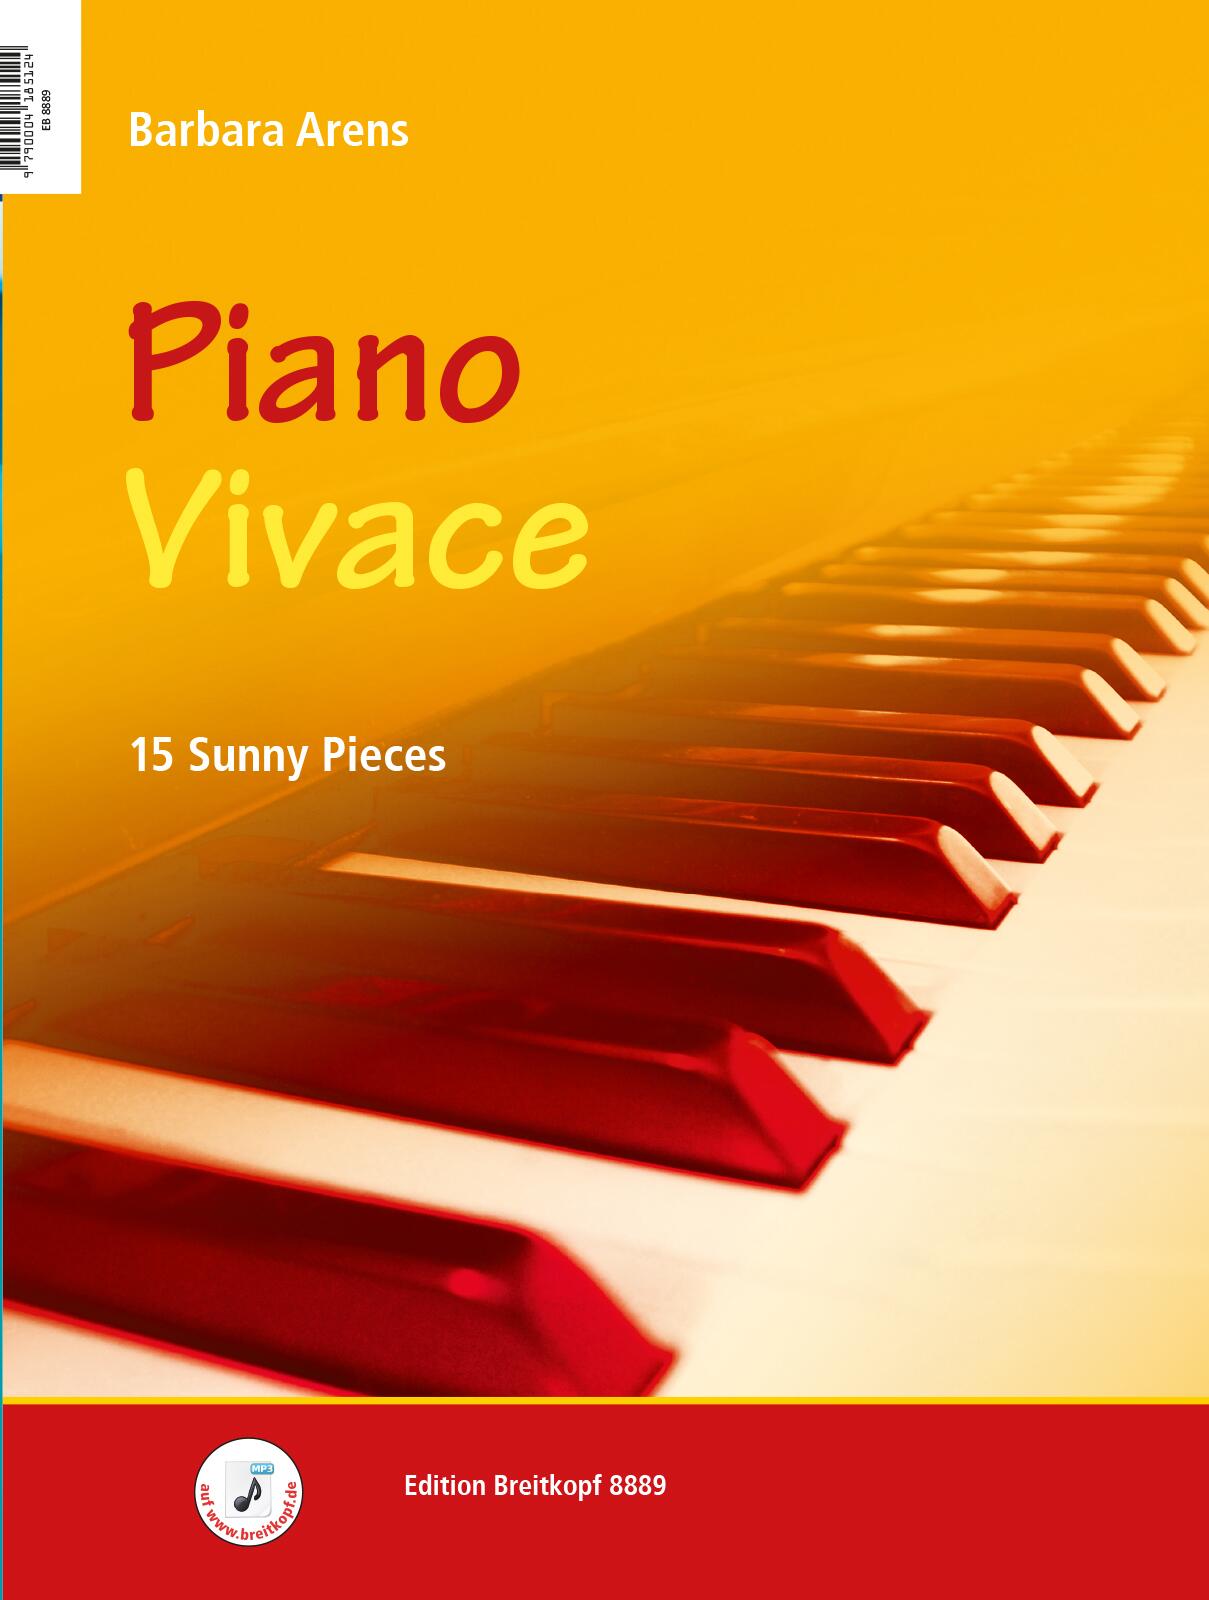 Piano Vivace/Piano Tranquillo Klavier / 15 Sunny Pieces/15 Relaxing Pieces : photo 1